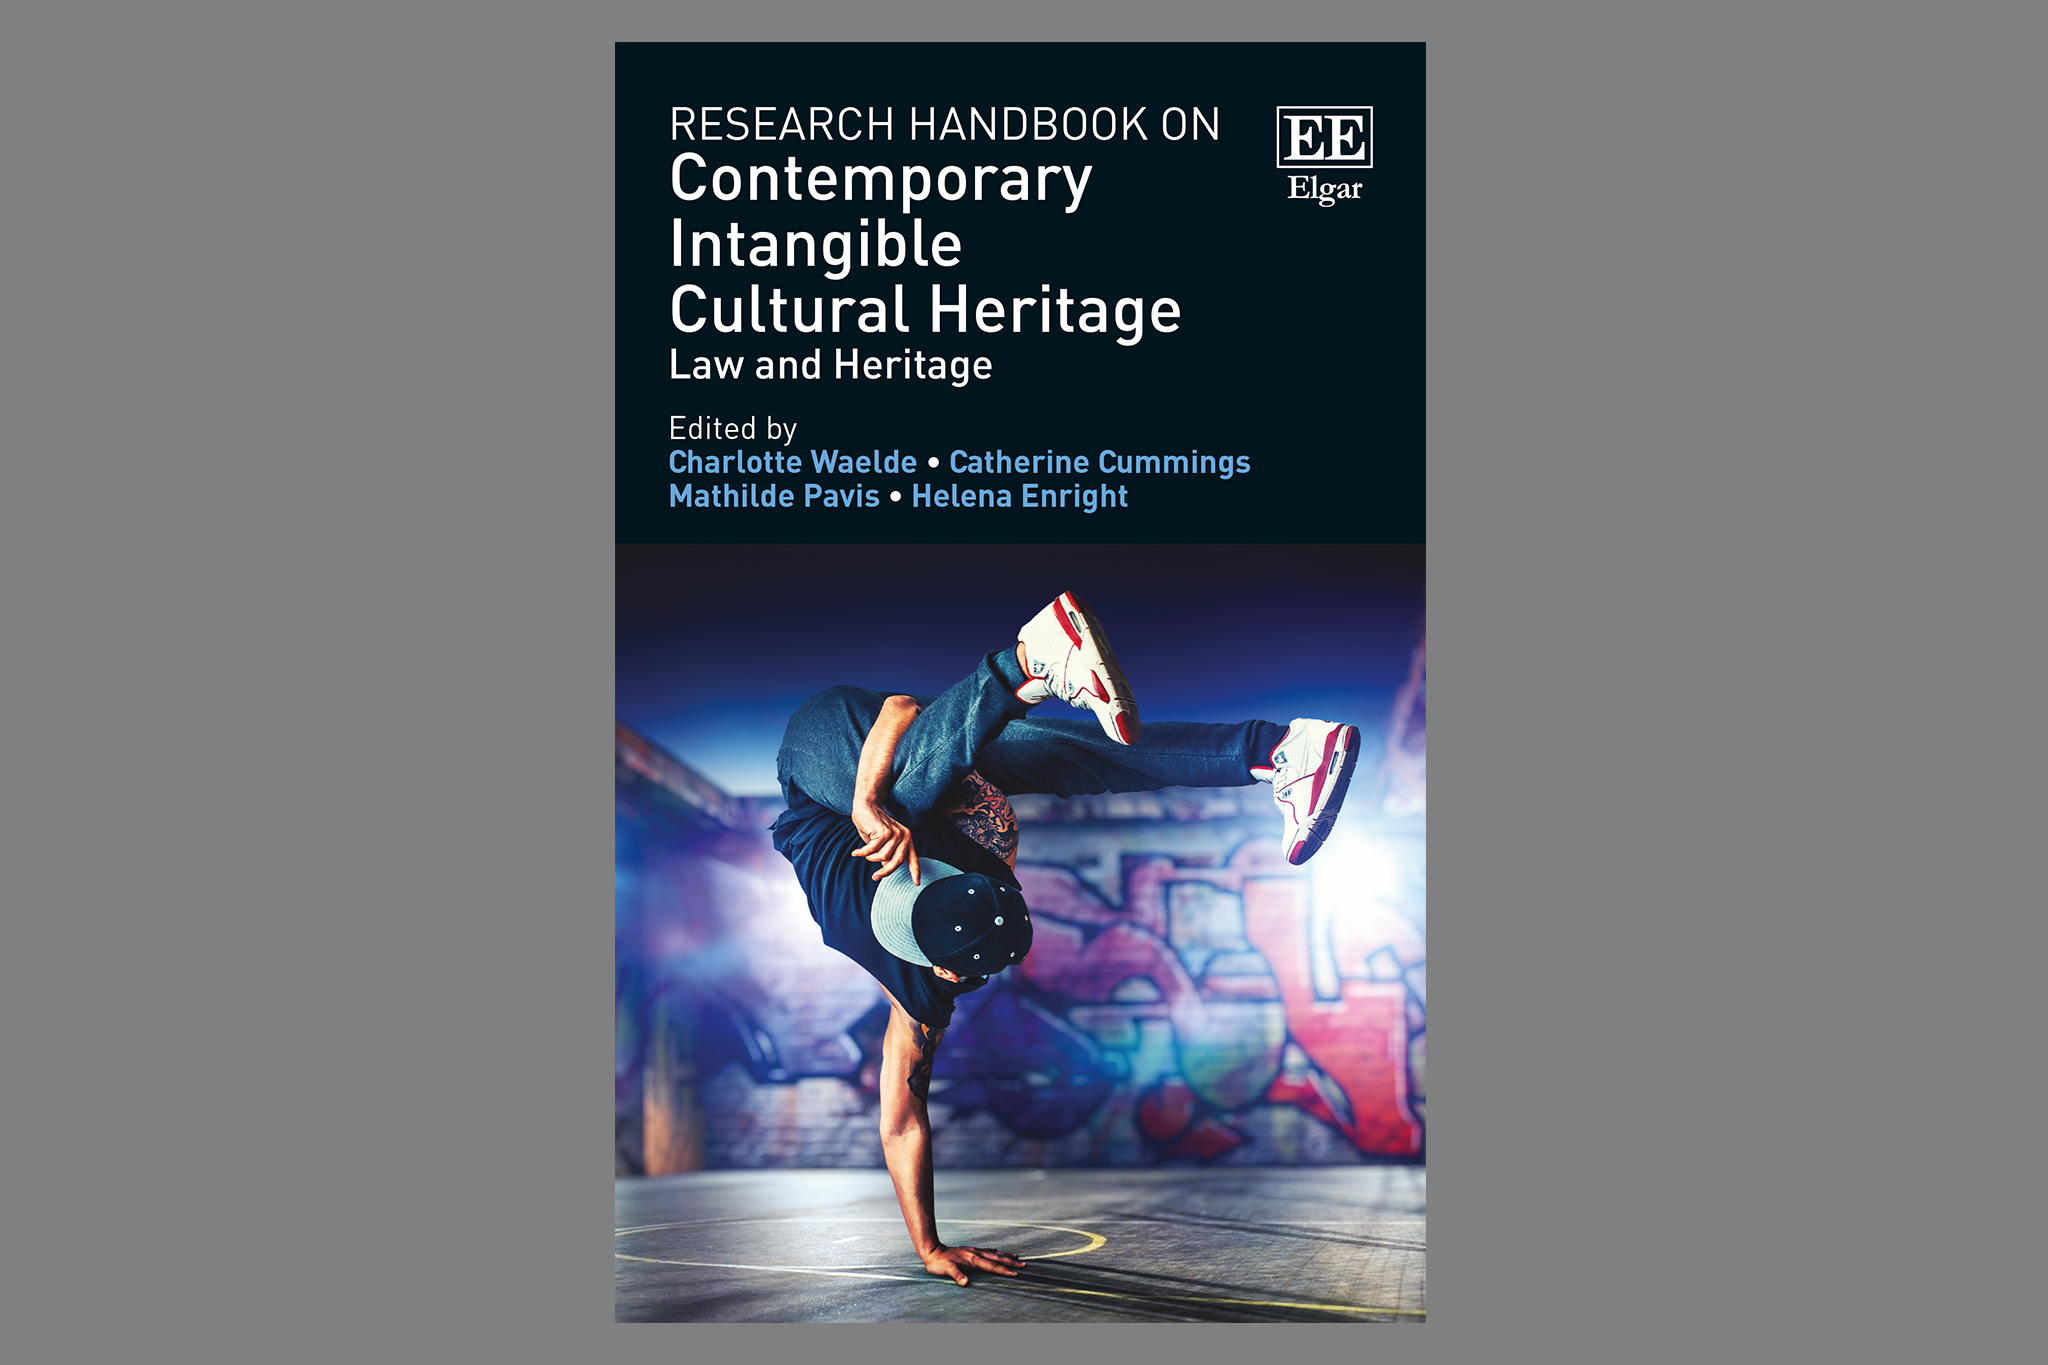 Research Handbook on Contemporary ICH